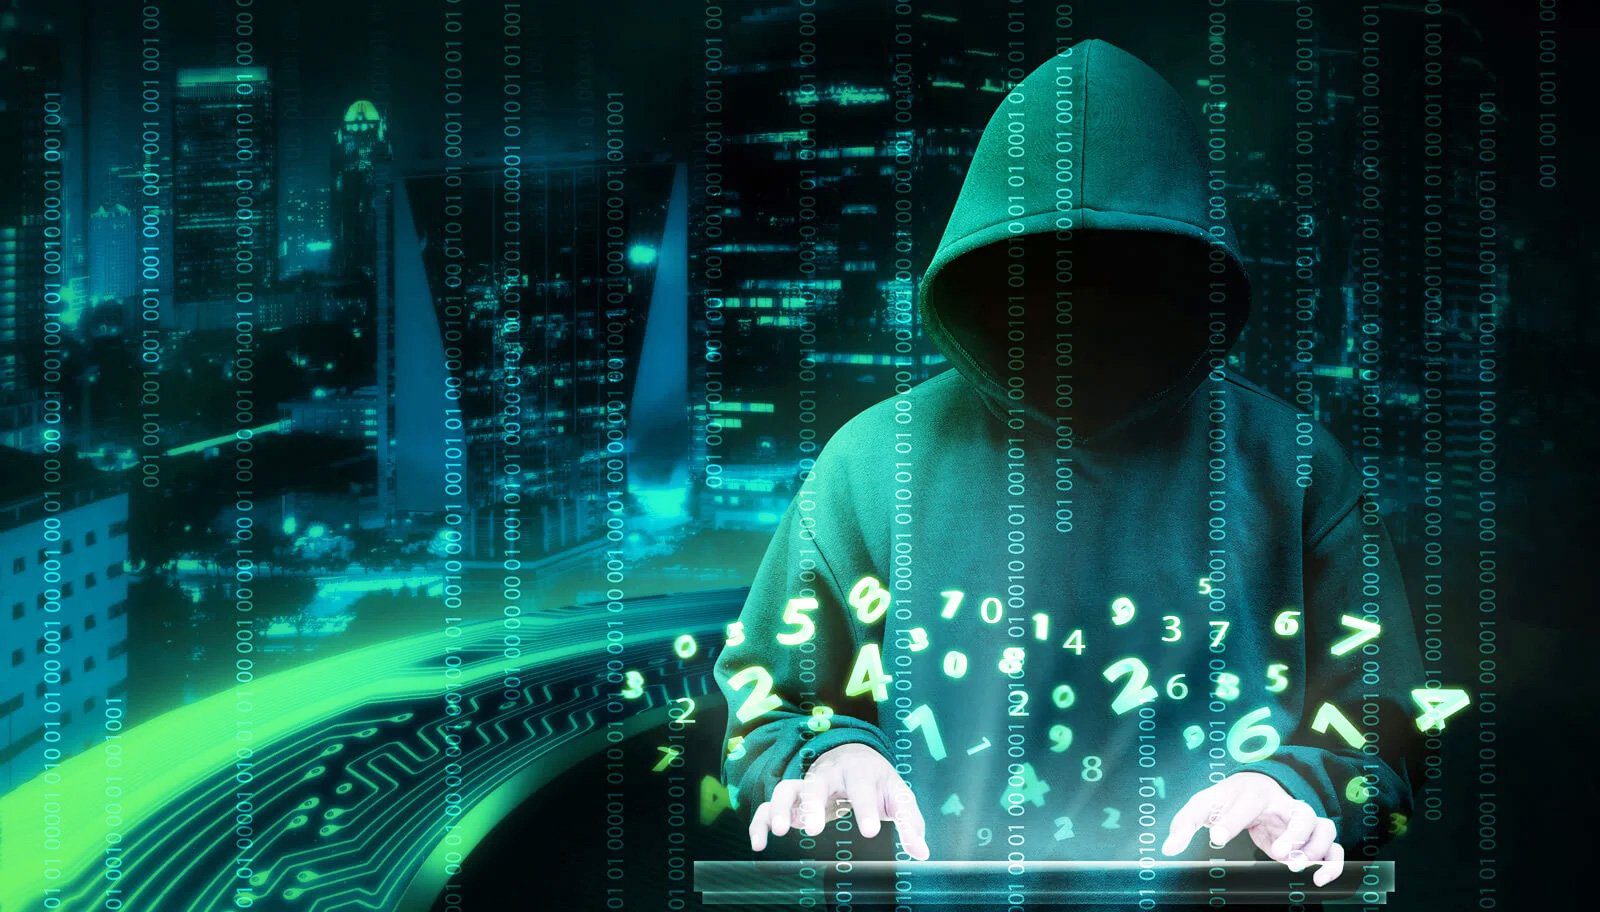 Russian hackers use PowerShell USB malware to drop backdoors – Source: www.bleepingcomputer.com